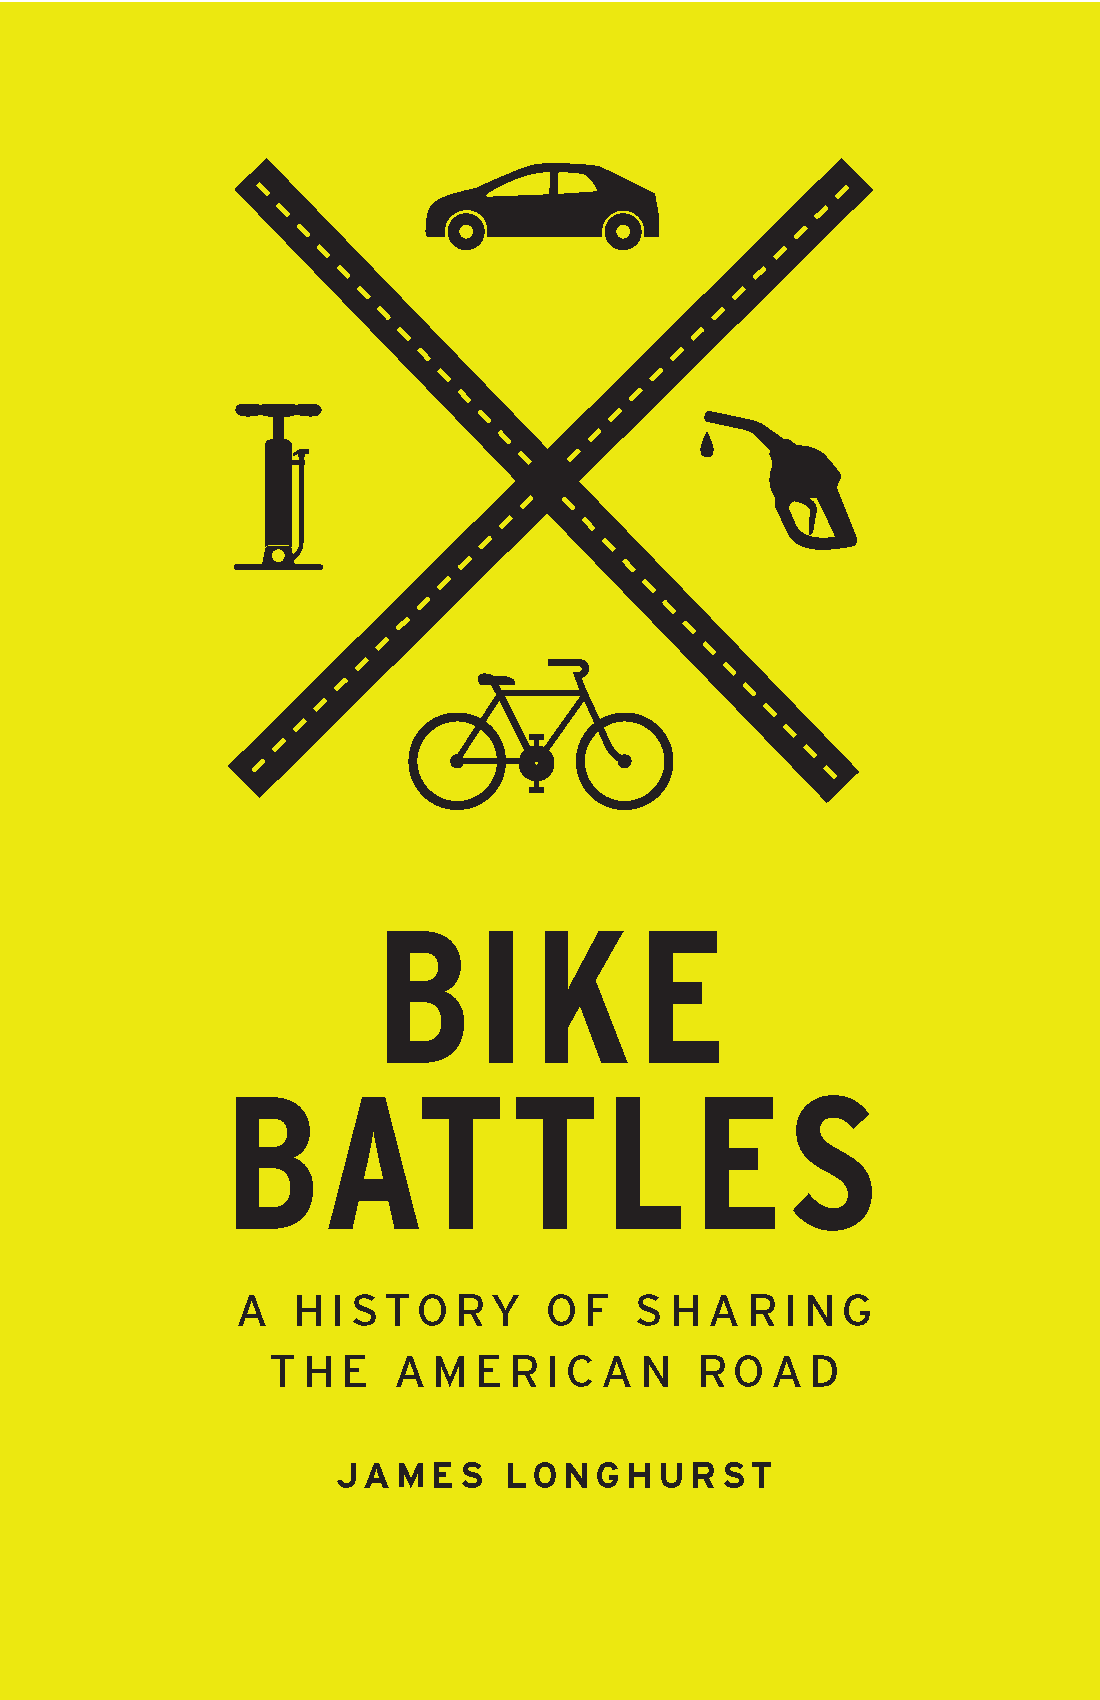   Bike Battles book cover. &nbsp;(University of Washington Press, 2015)  